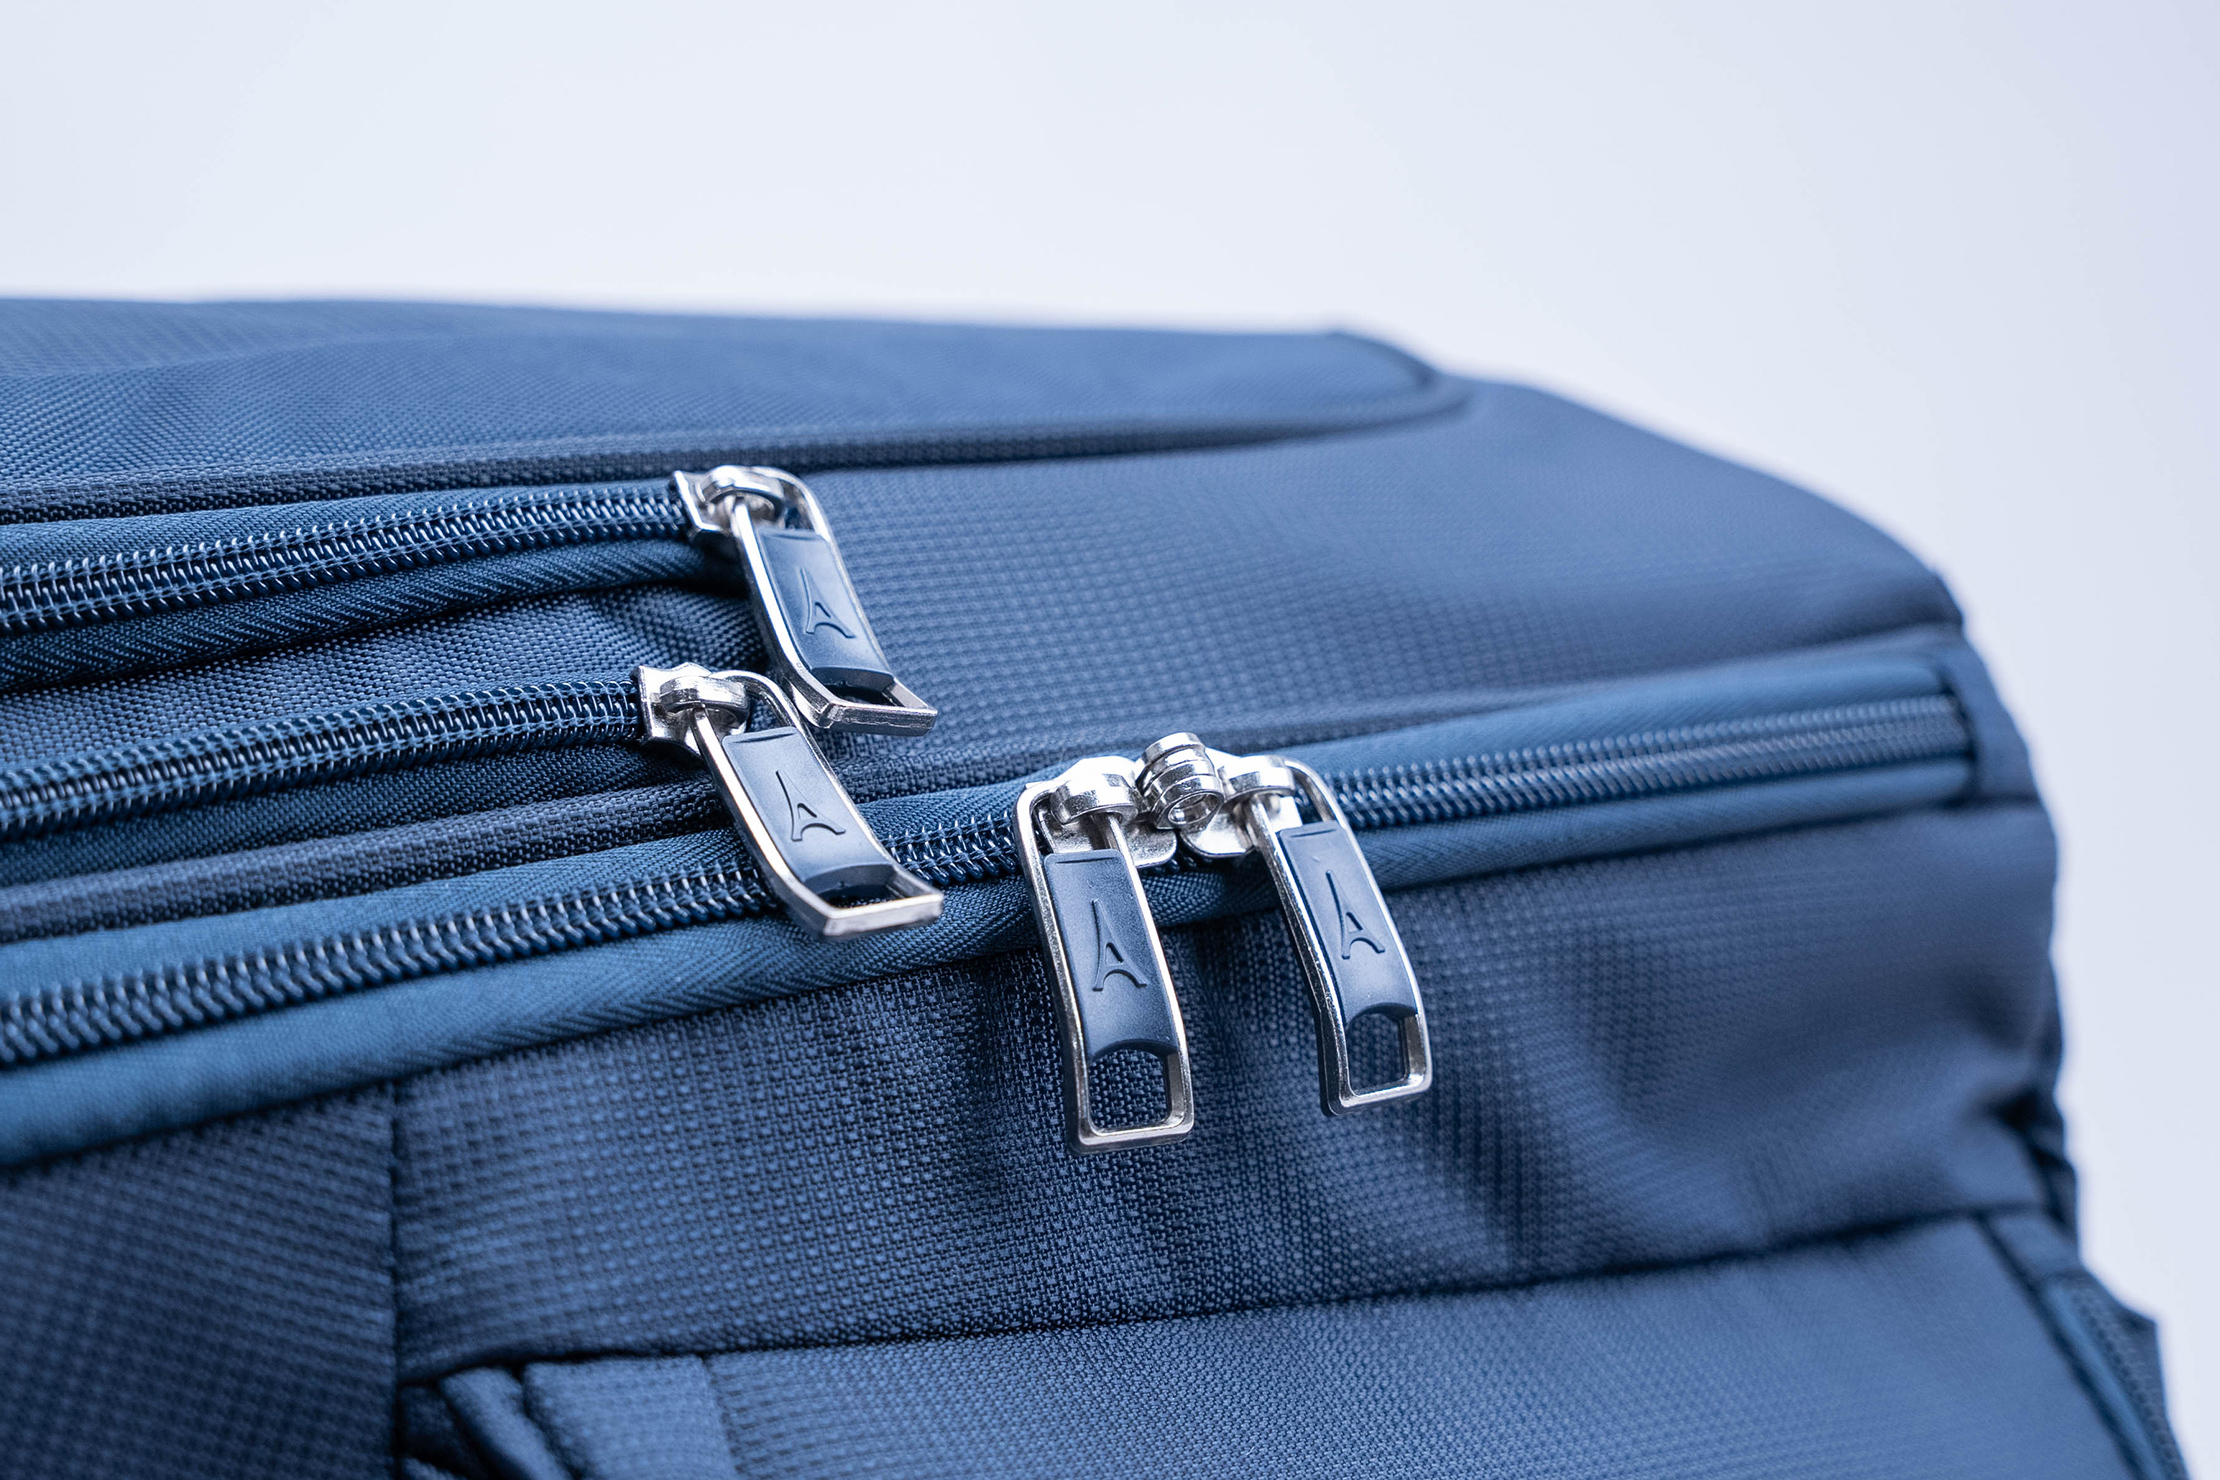 Travelpro Maxlite 5 Laptop Backpack Zippers